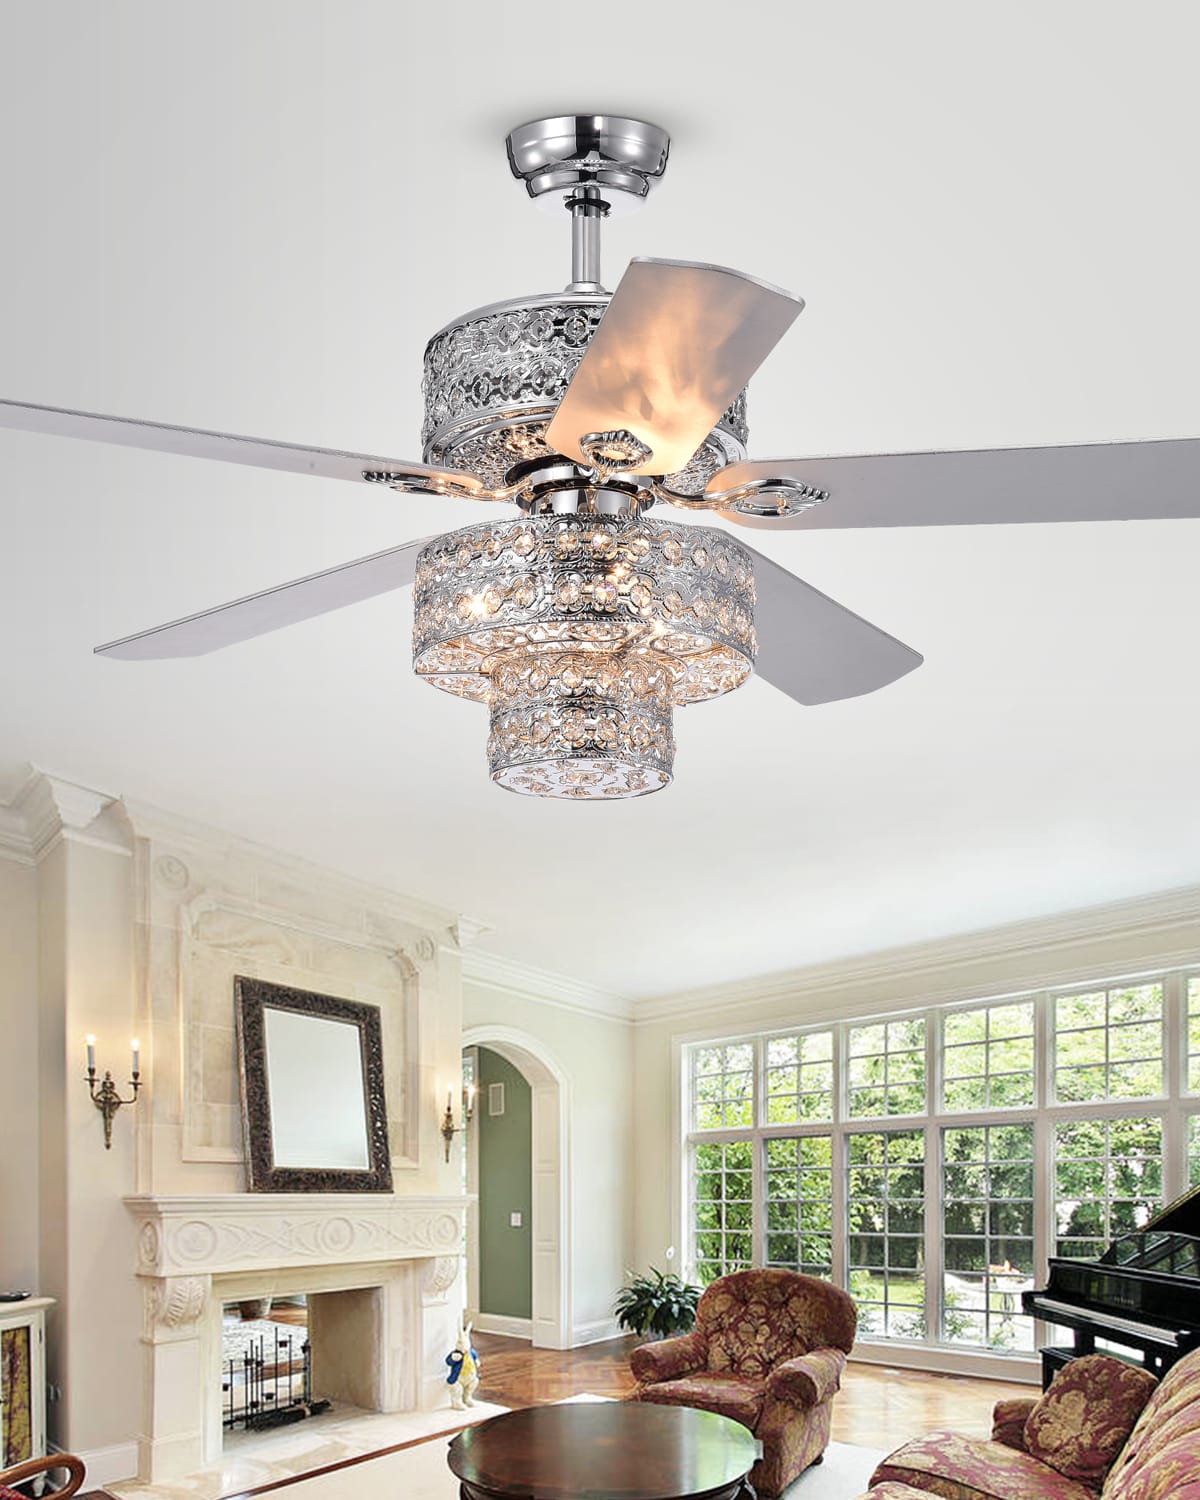 Home Accessories Two-tier Metalwork Chandelier Ceiling Fan In Gray